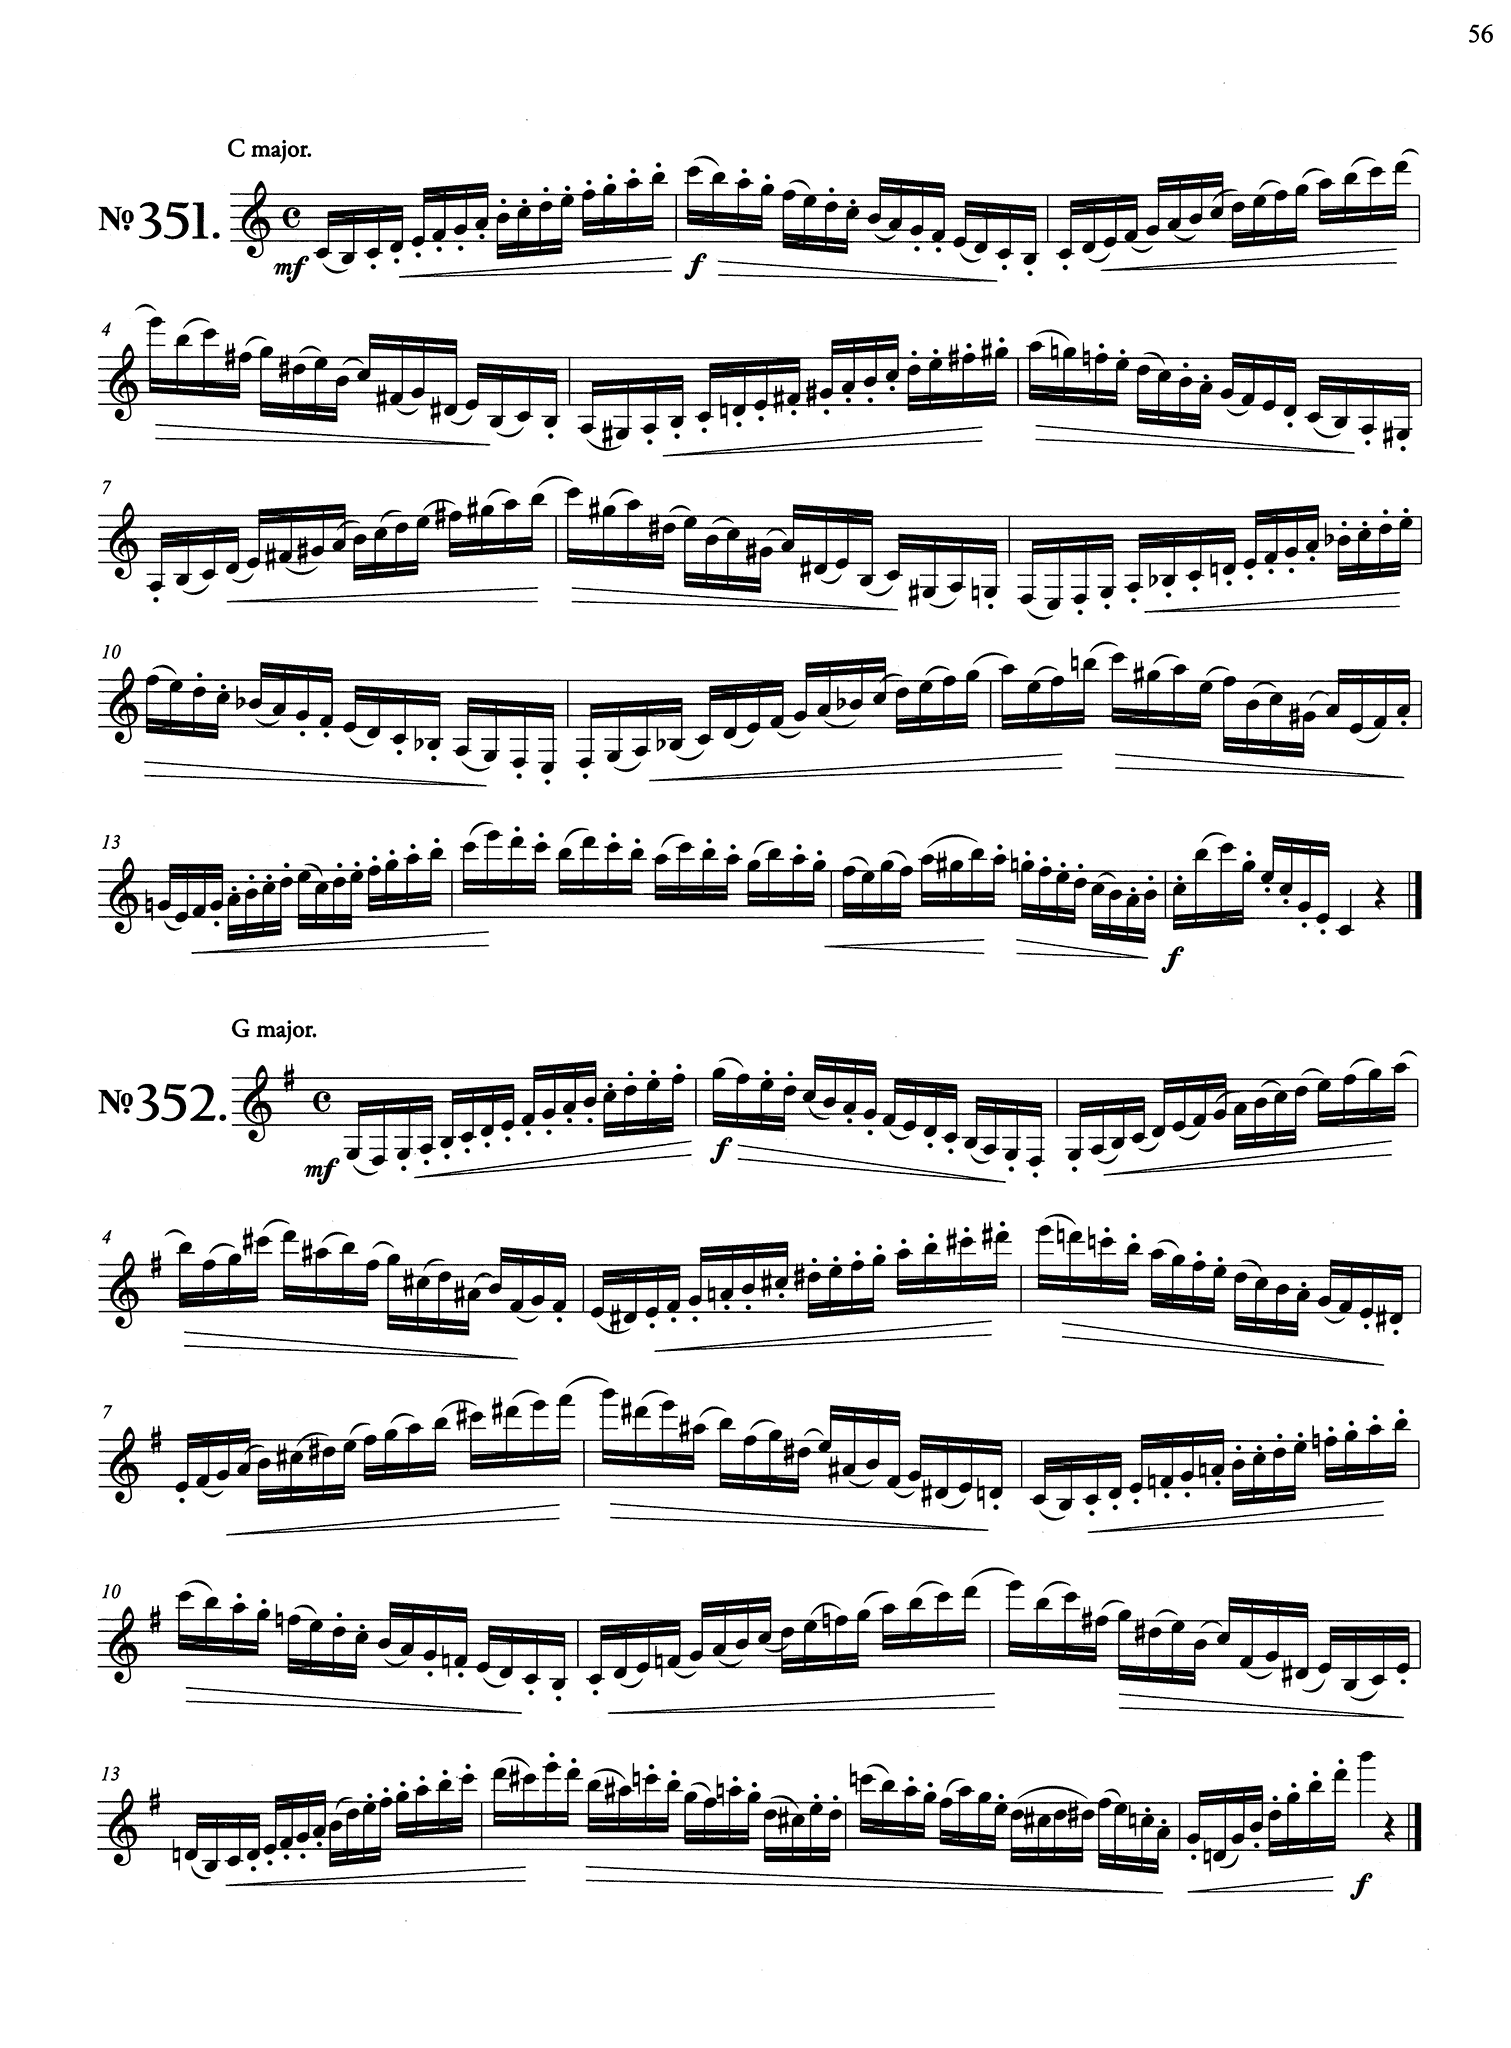 Complete Clarinet Kroepsch 416 Studies Book 3